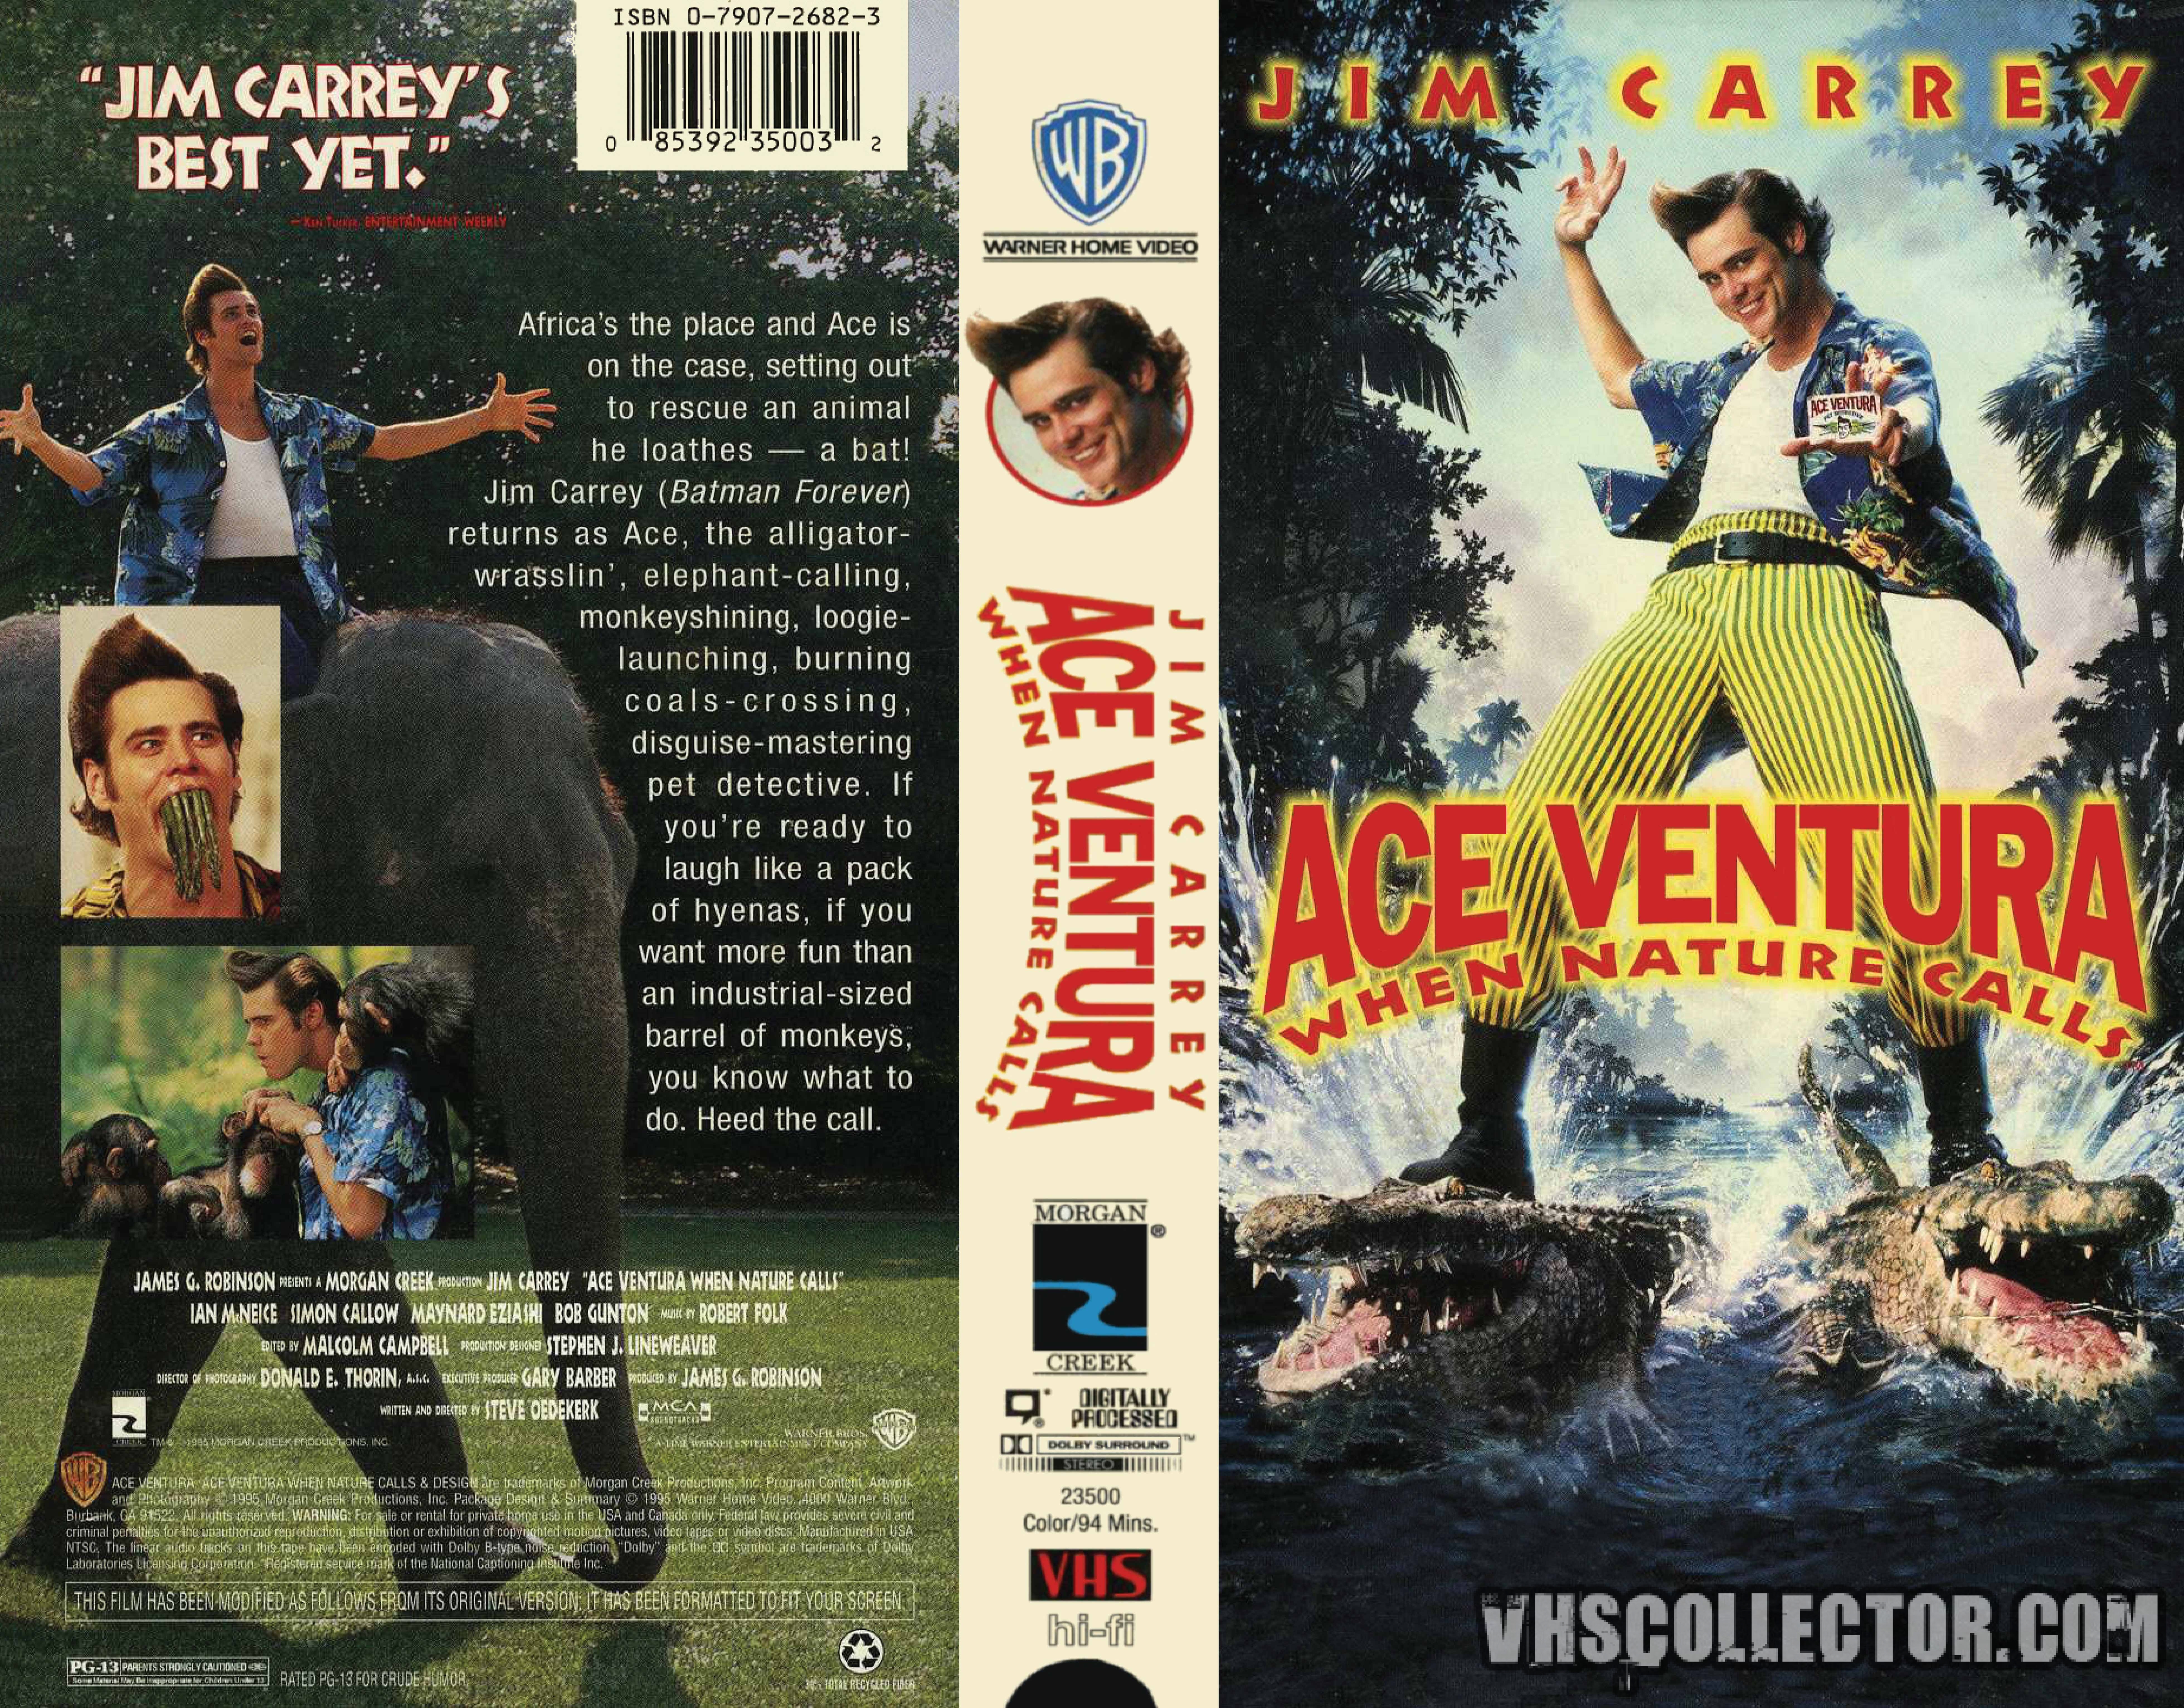 Ace Ventura: Nature | VHSCollector.com